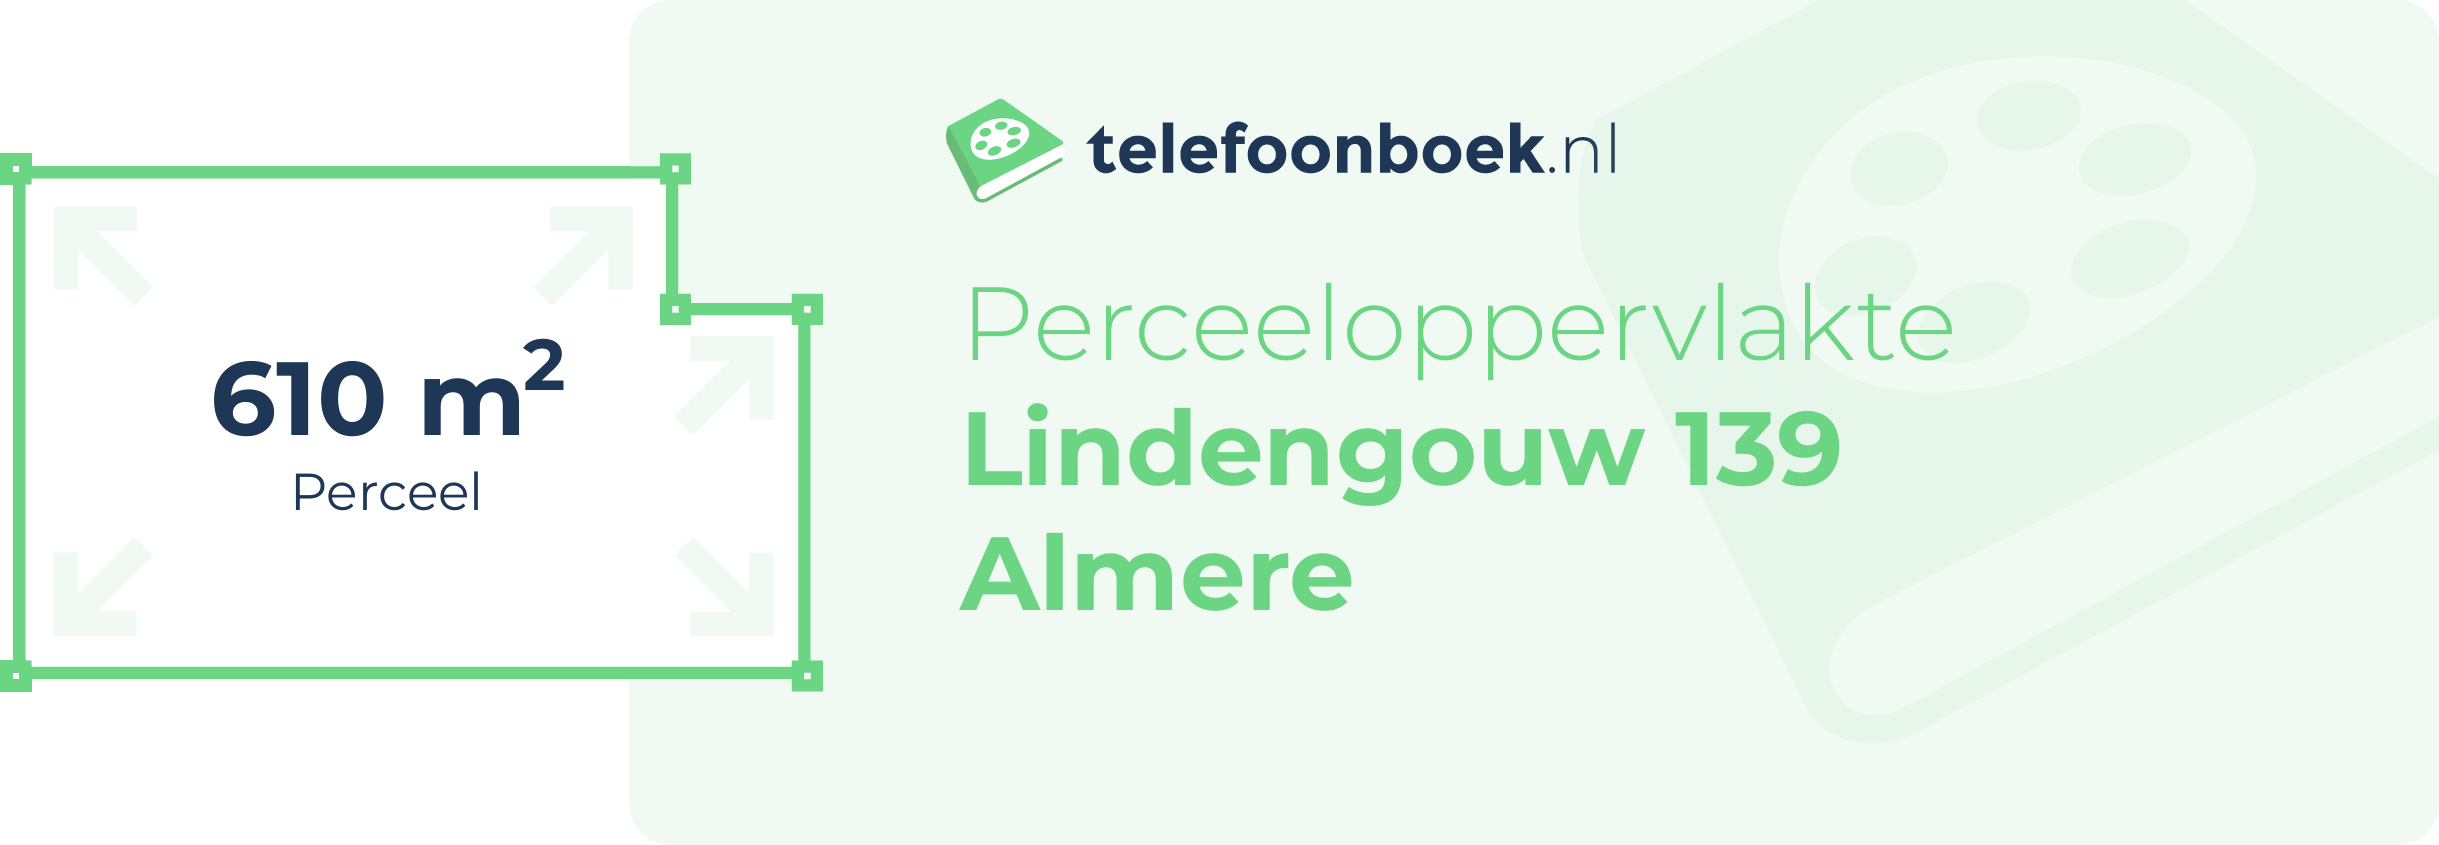 Perceeloppervlakte Lindengouw 139 Almere